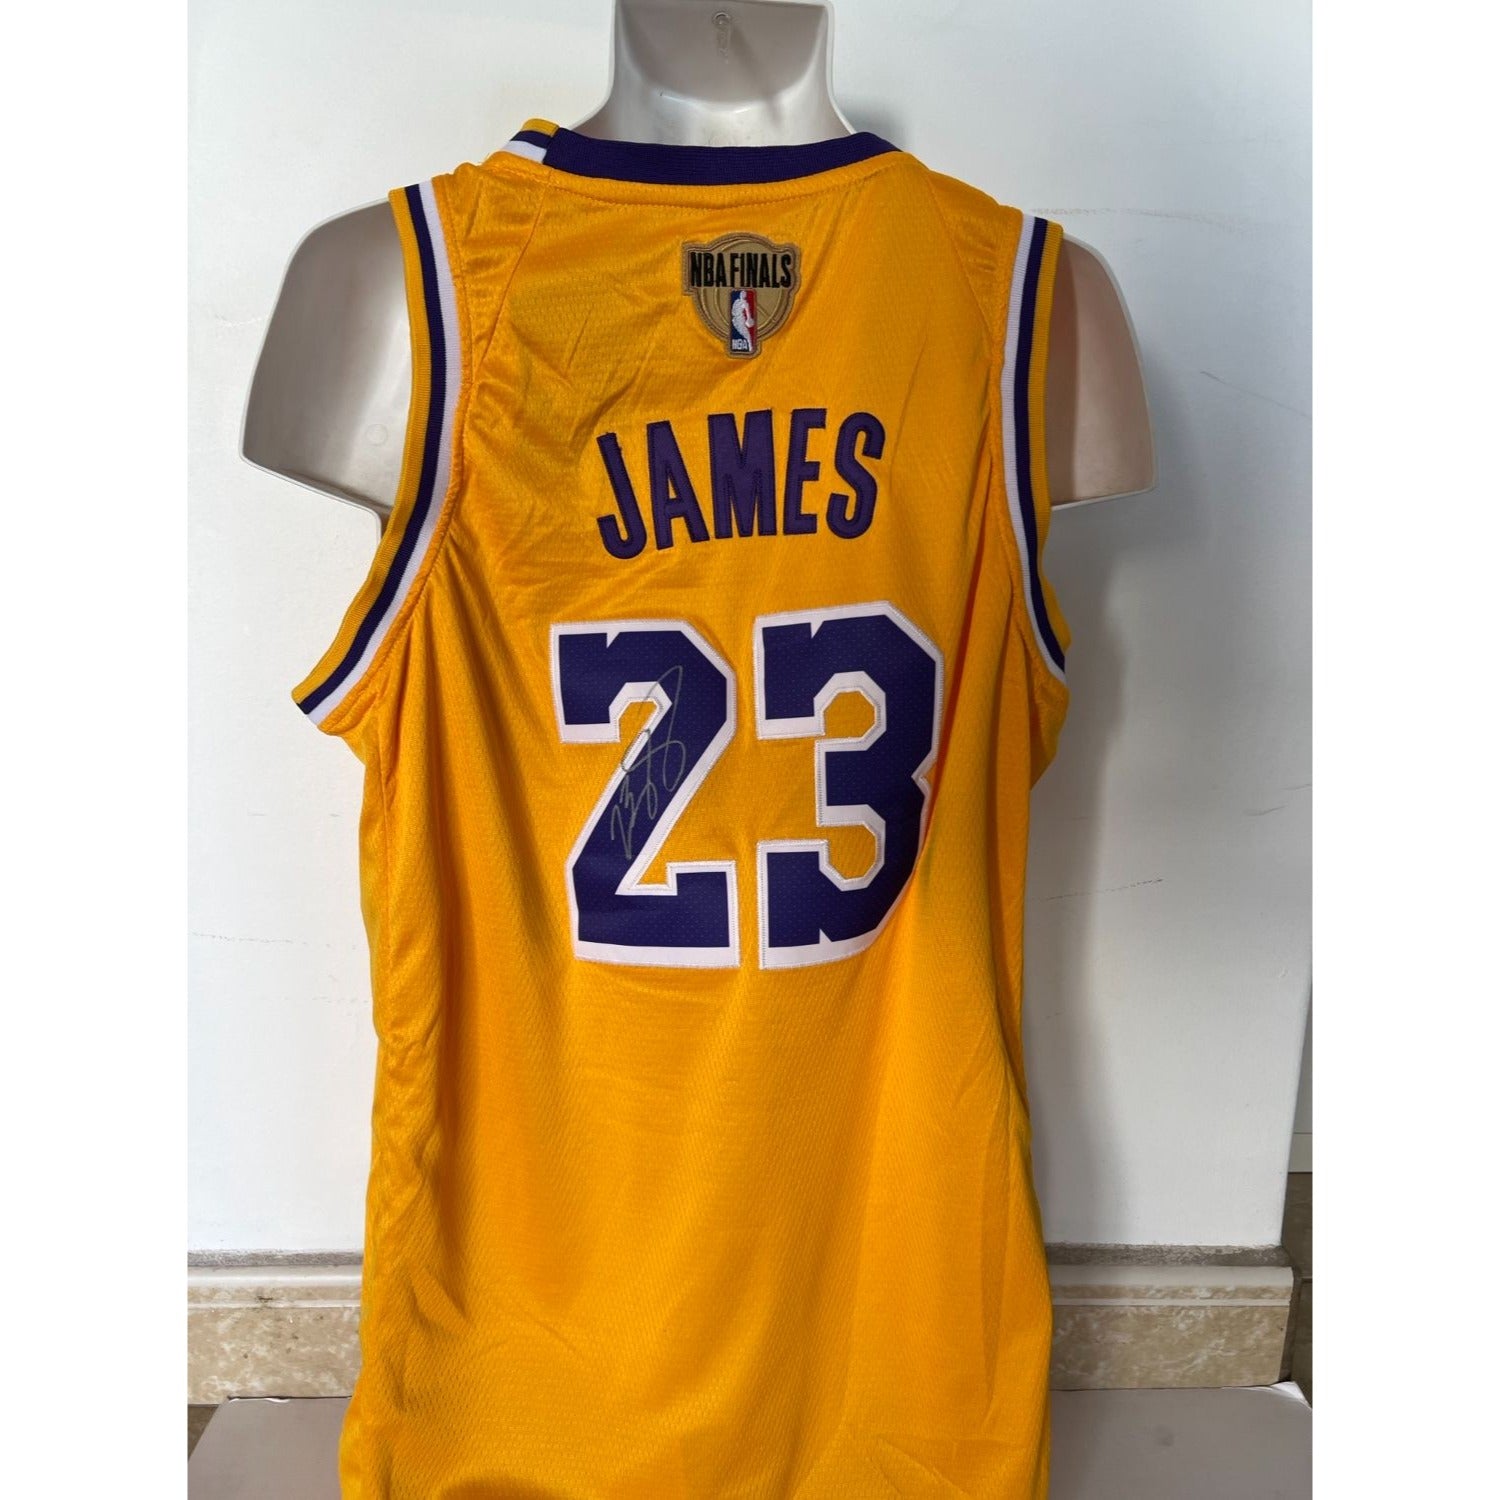 Nike Lebron James Lakers White Swingman Jersey Size 50 Wish logo NBA